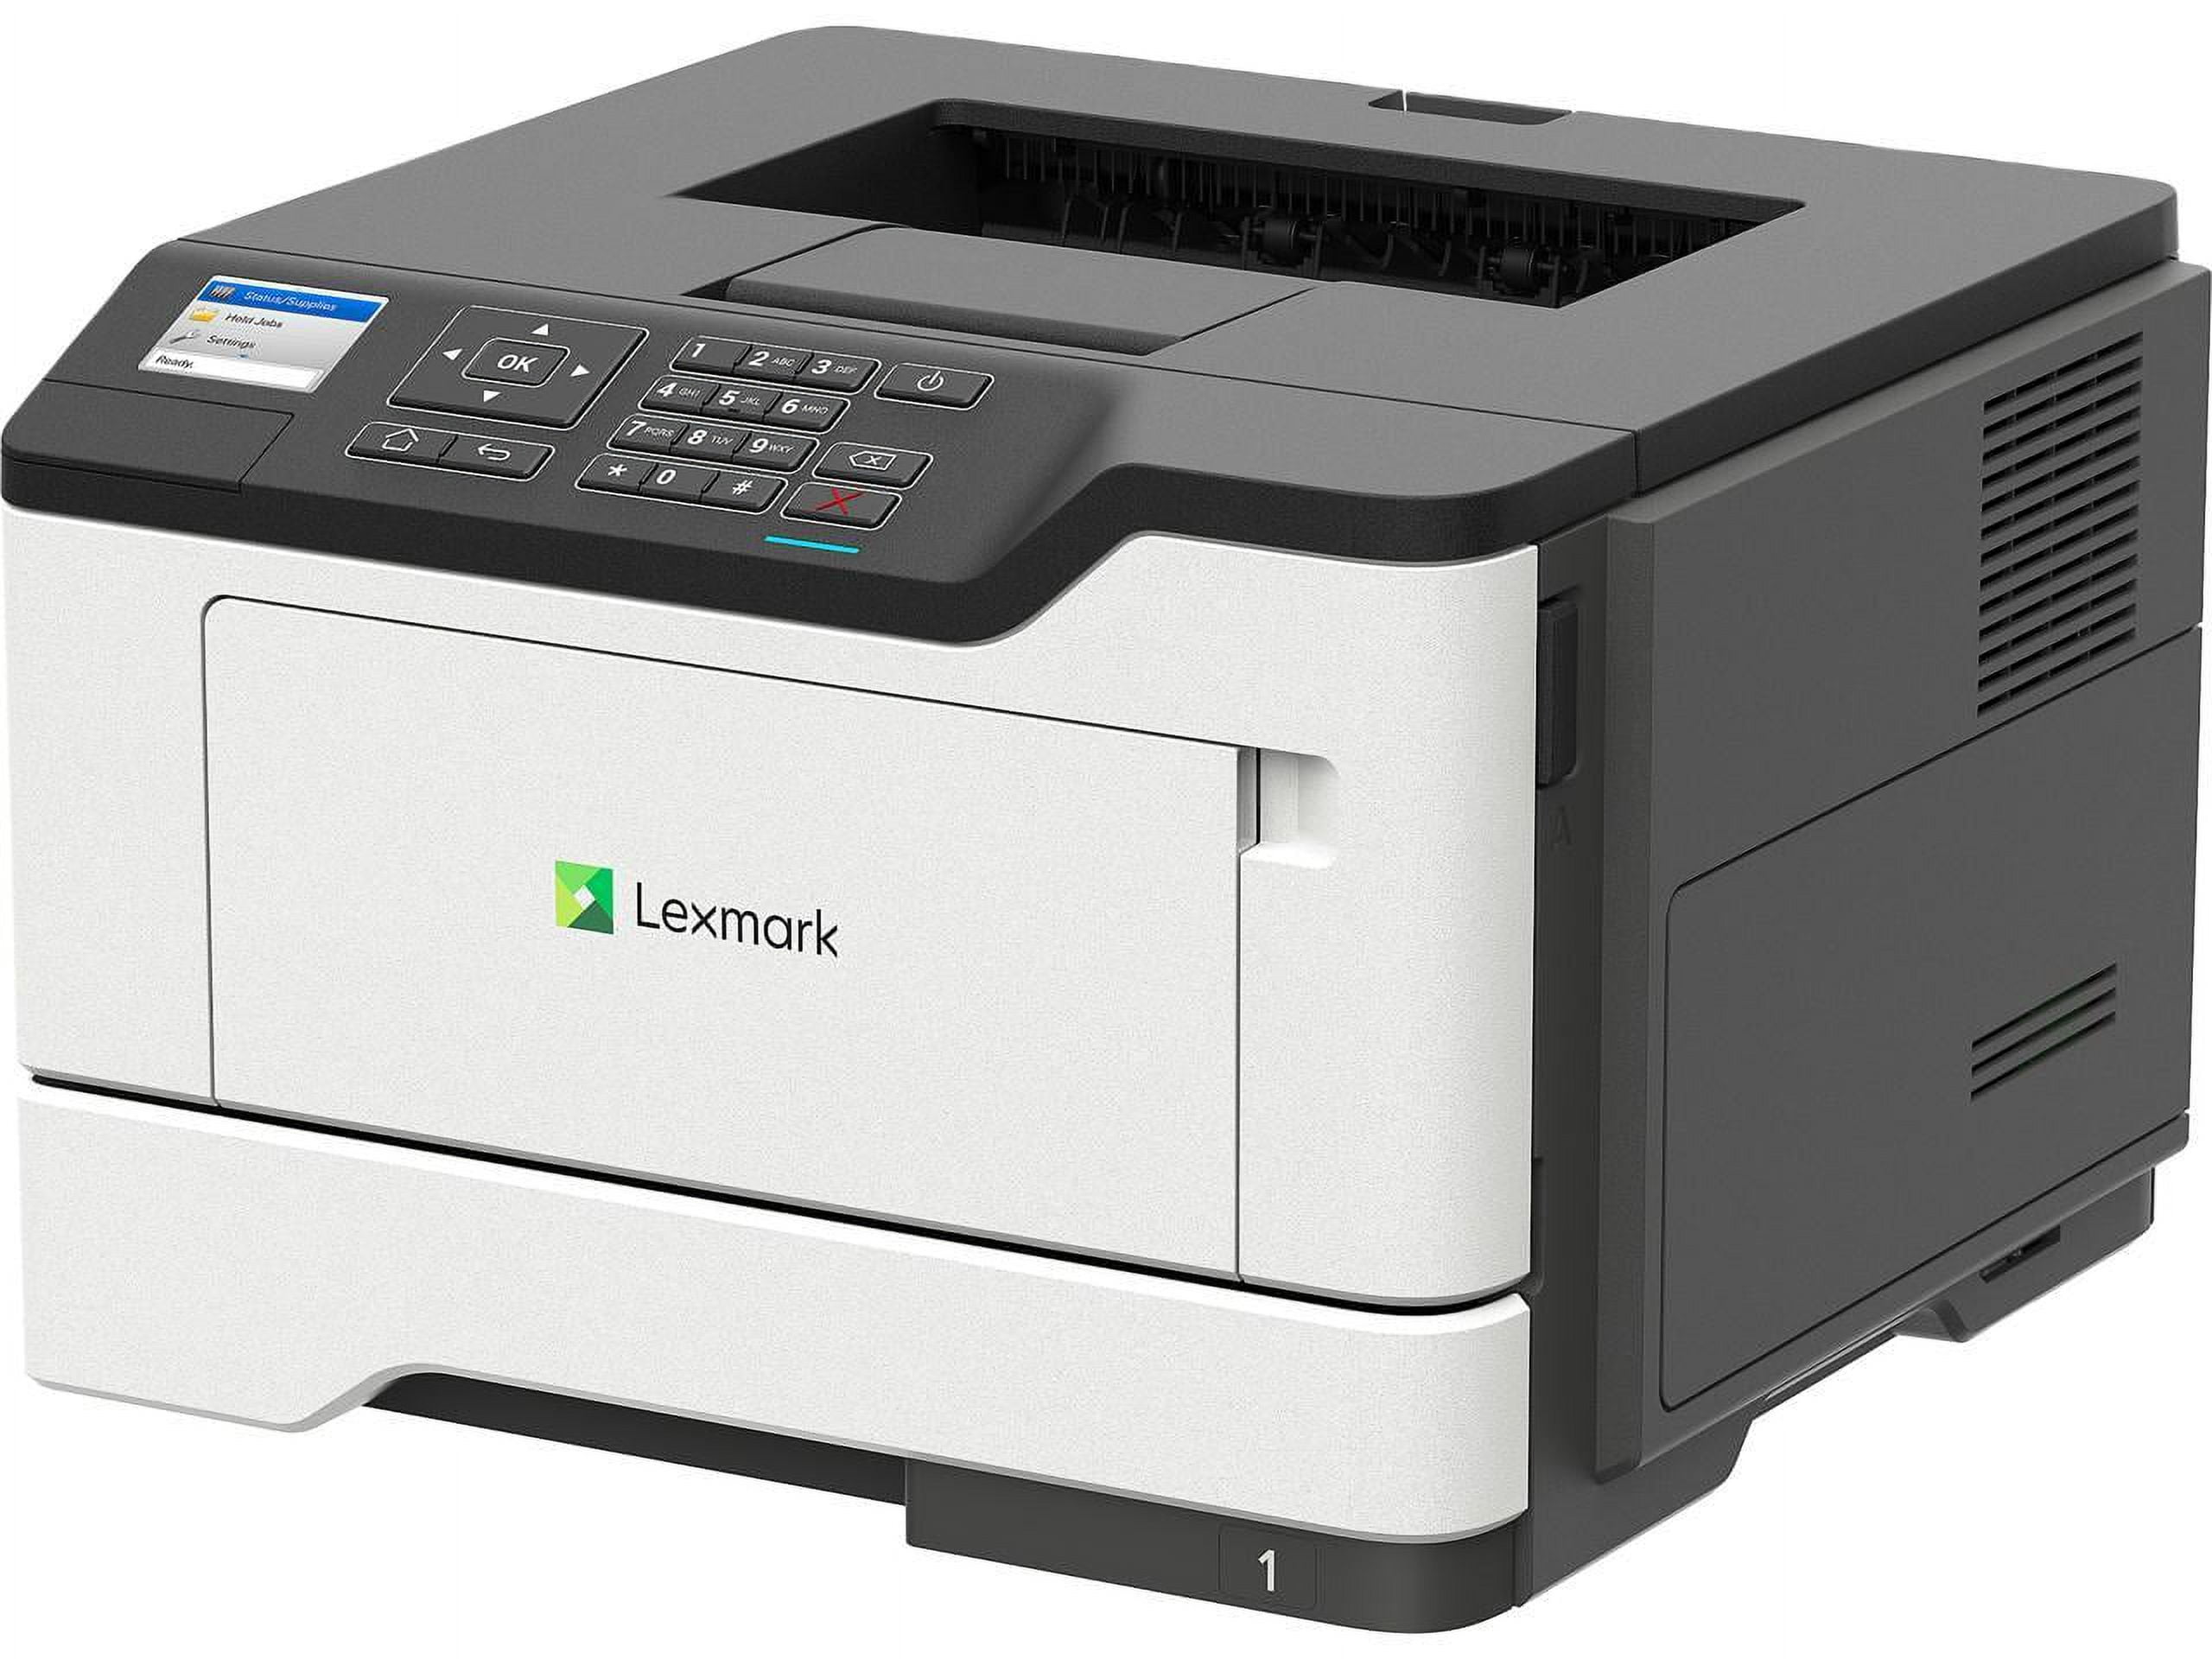 Picture of Lexmark 36S0300 MS521dn Monochrome Laser Printer - Gray&#44; White